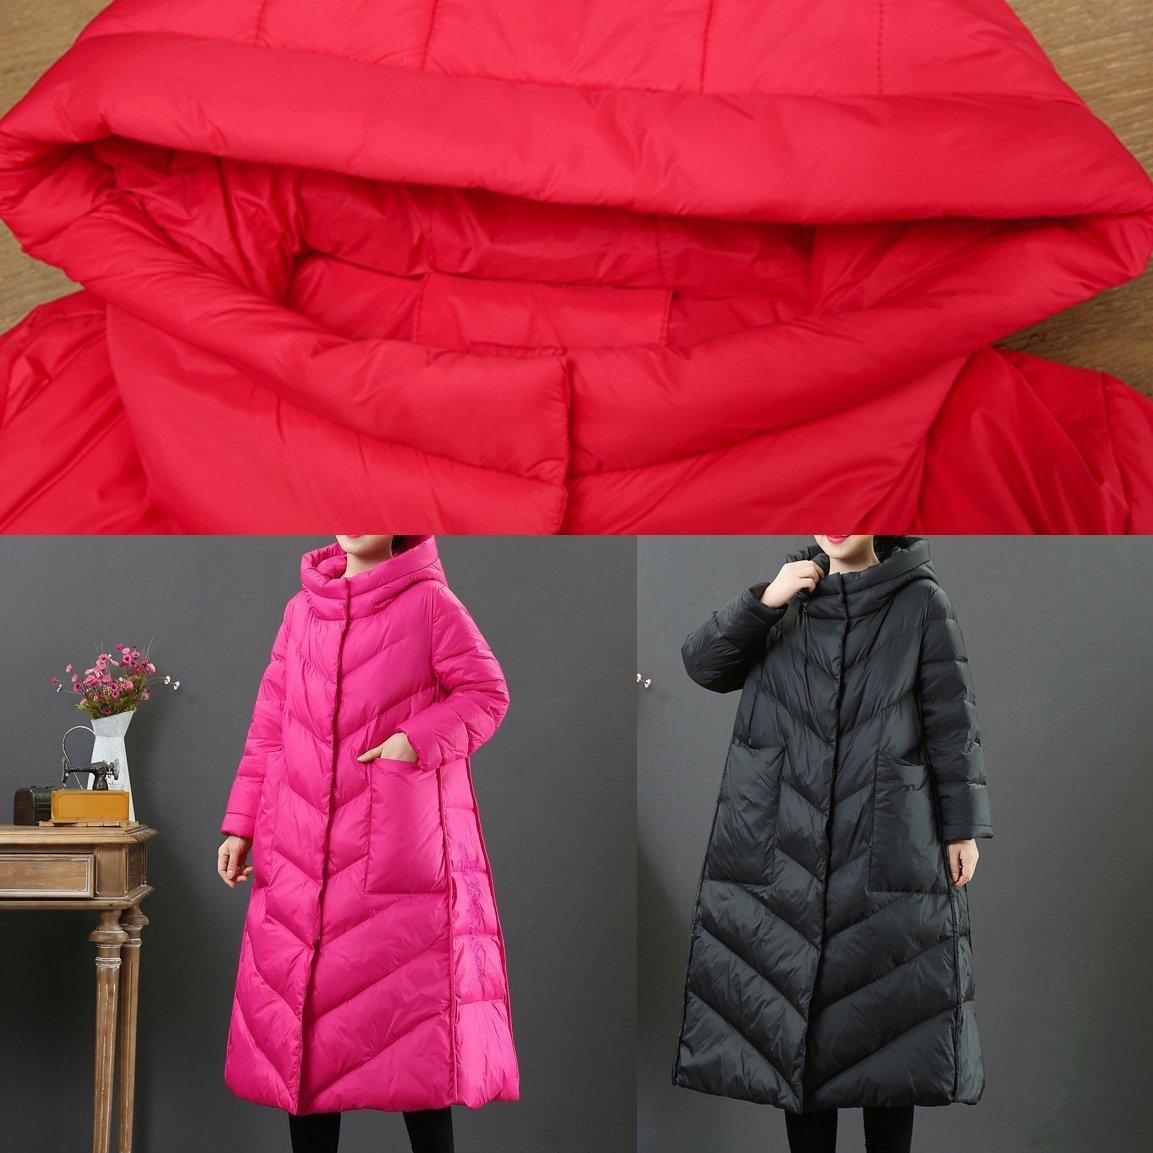 Luxury black down jacket woman plus size winter jacket hooded Warm Jackets - Omychic